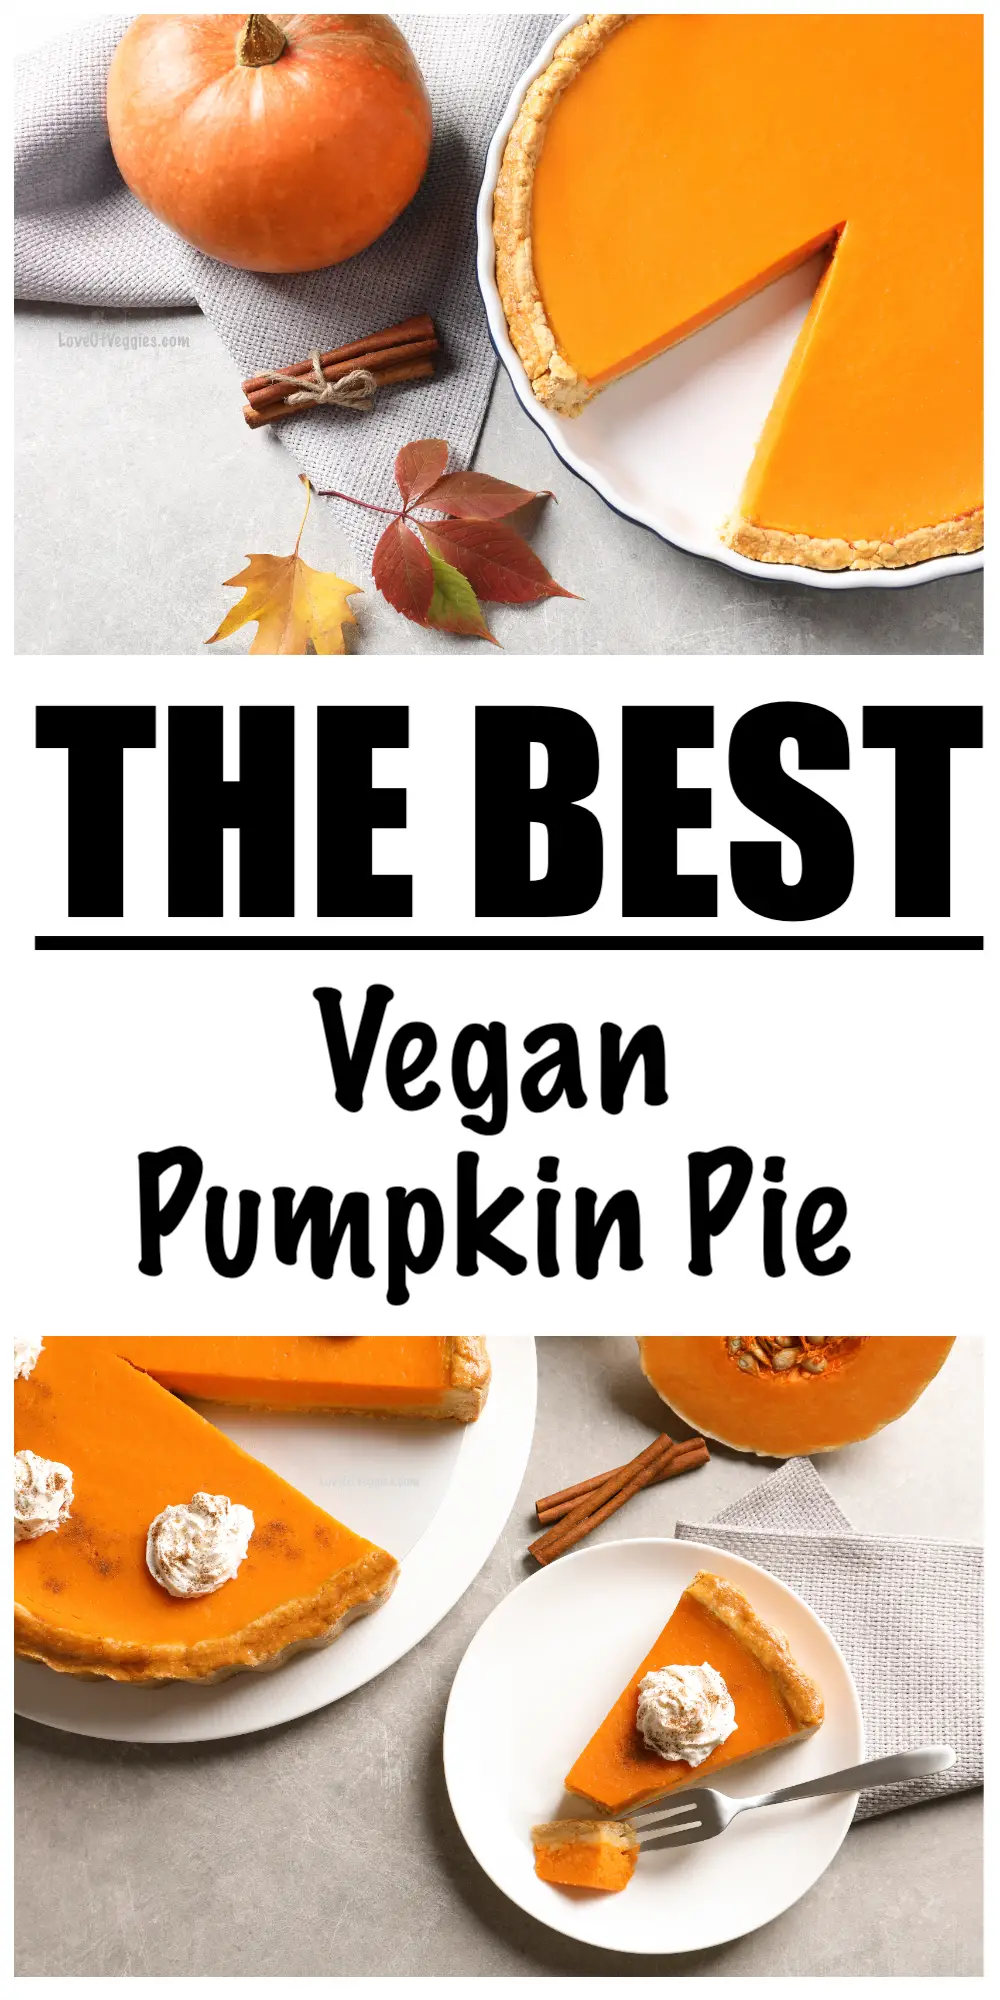 Vegan Pumpkin Pie Recipe